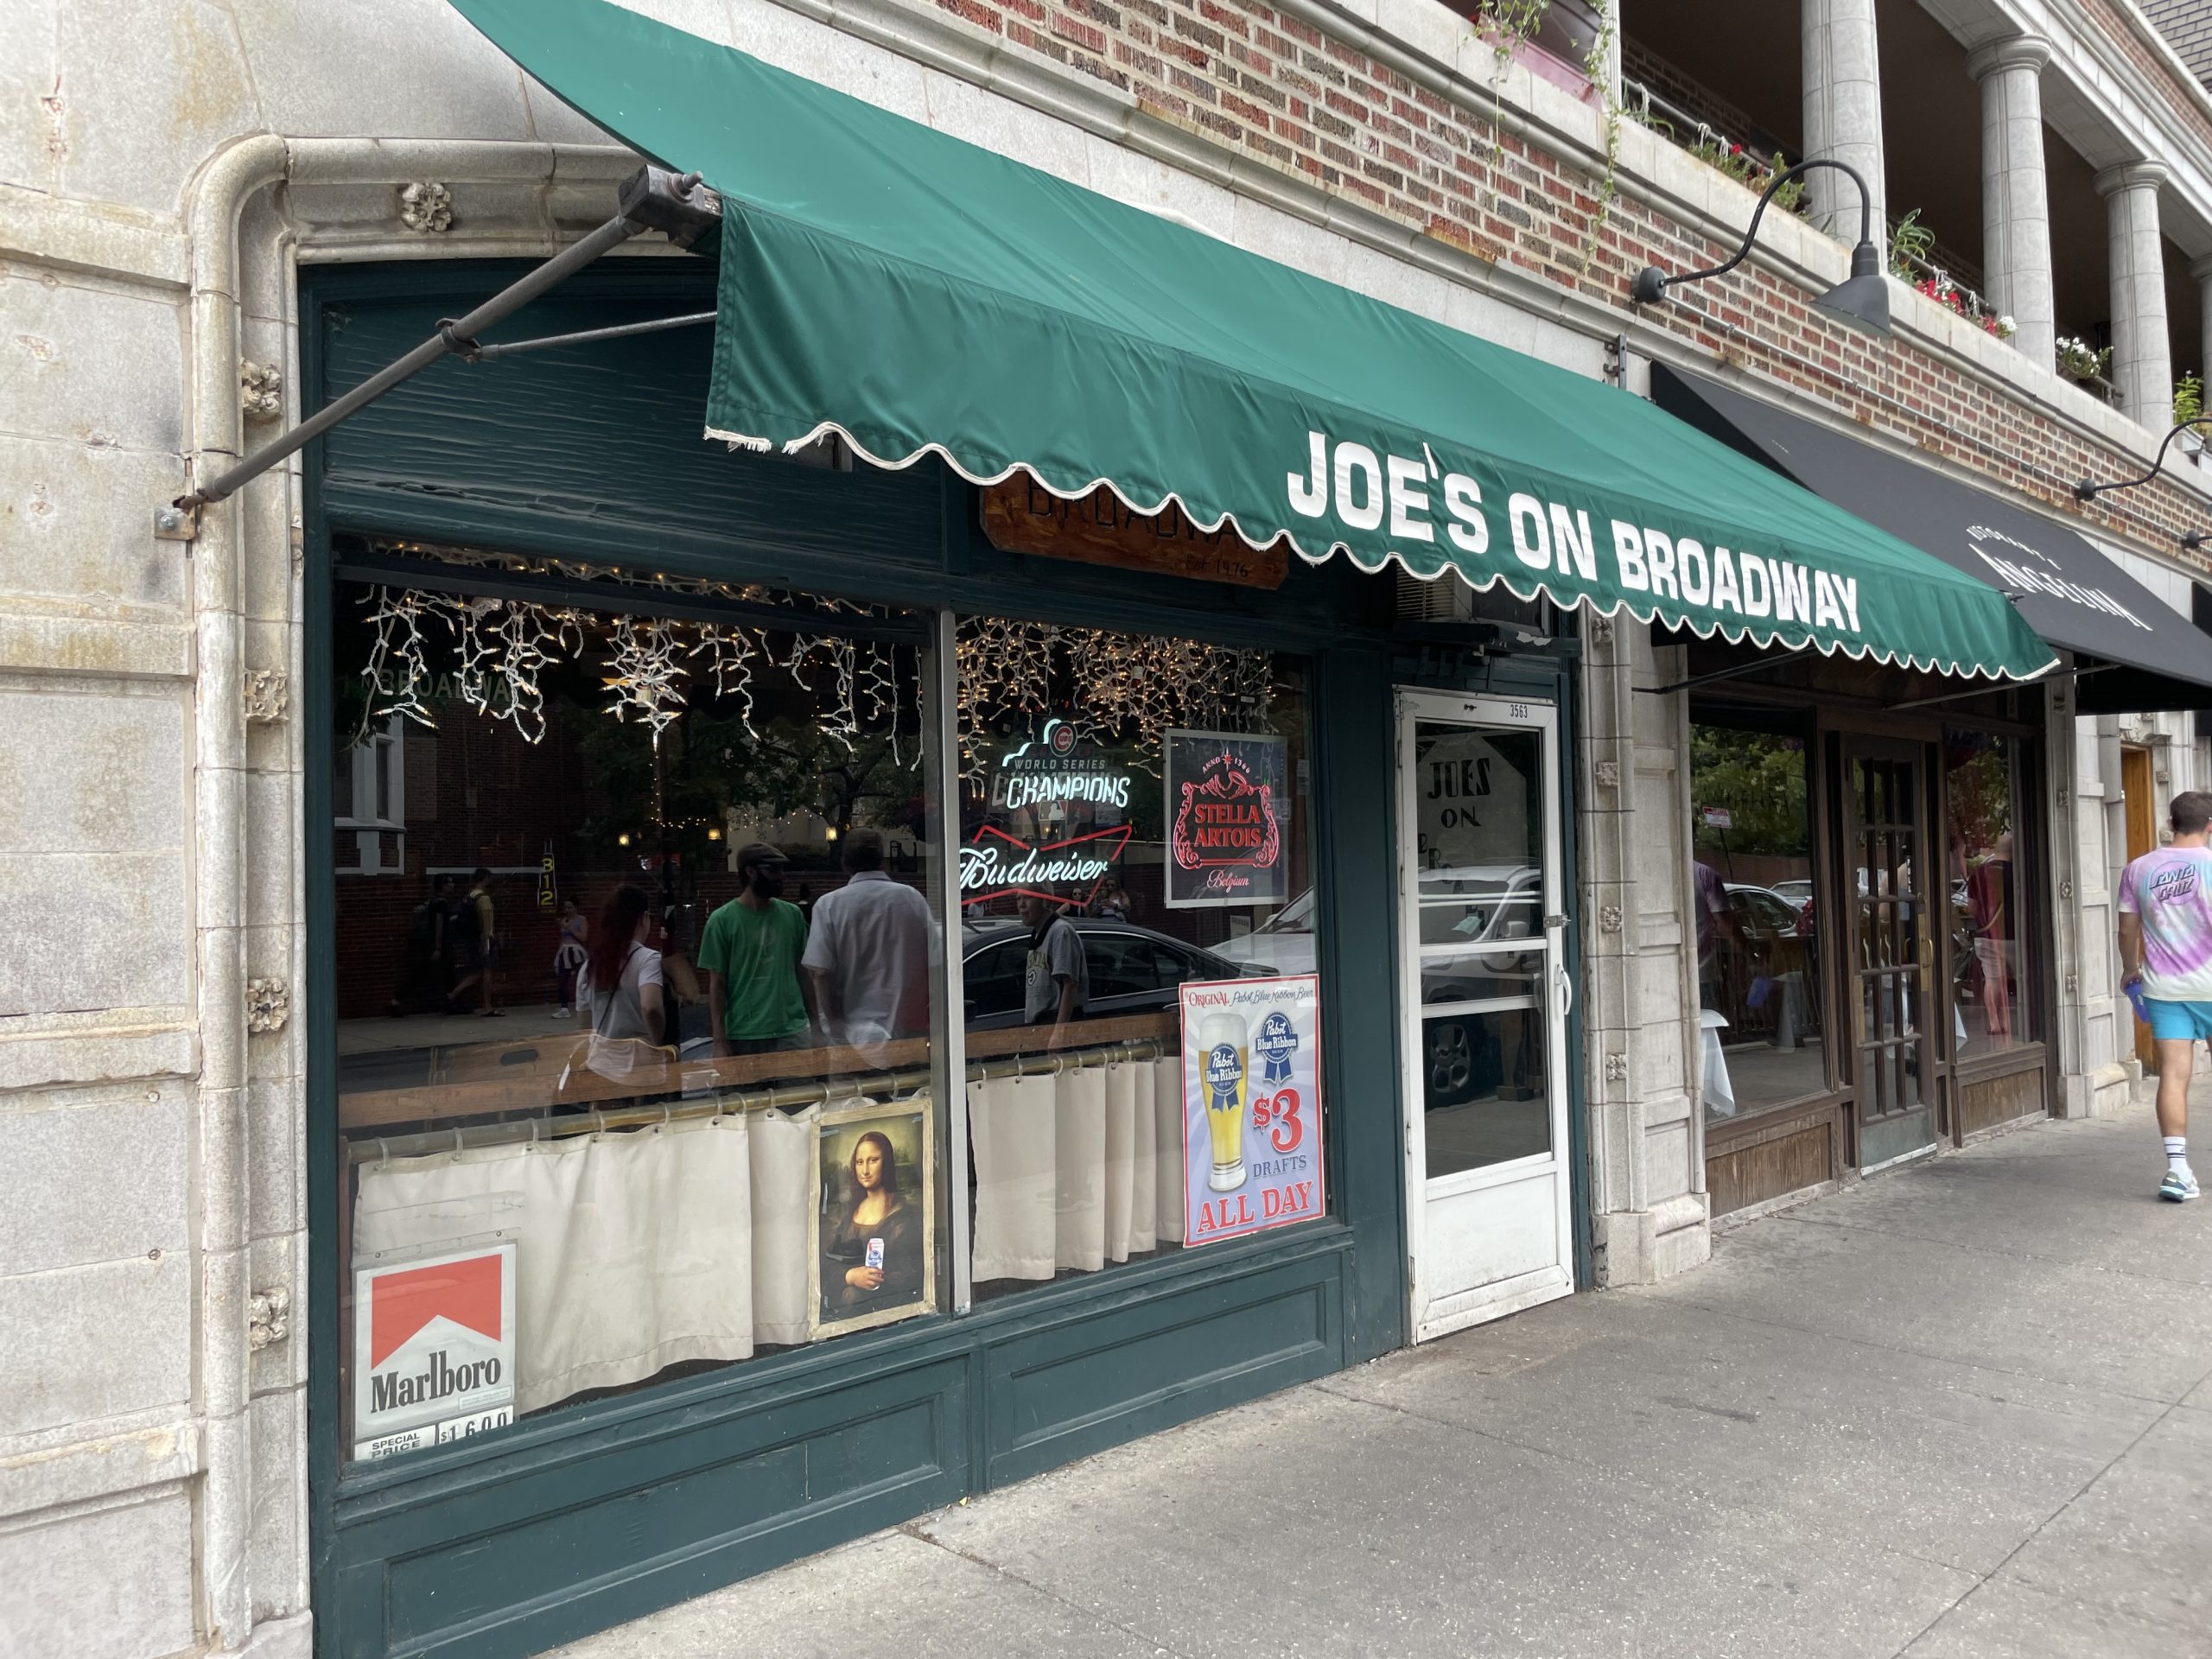 Joe's on Broadway - Chicago Dive Bar - Exterior Awning